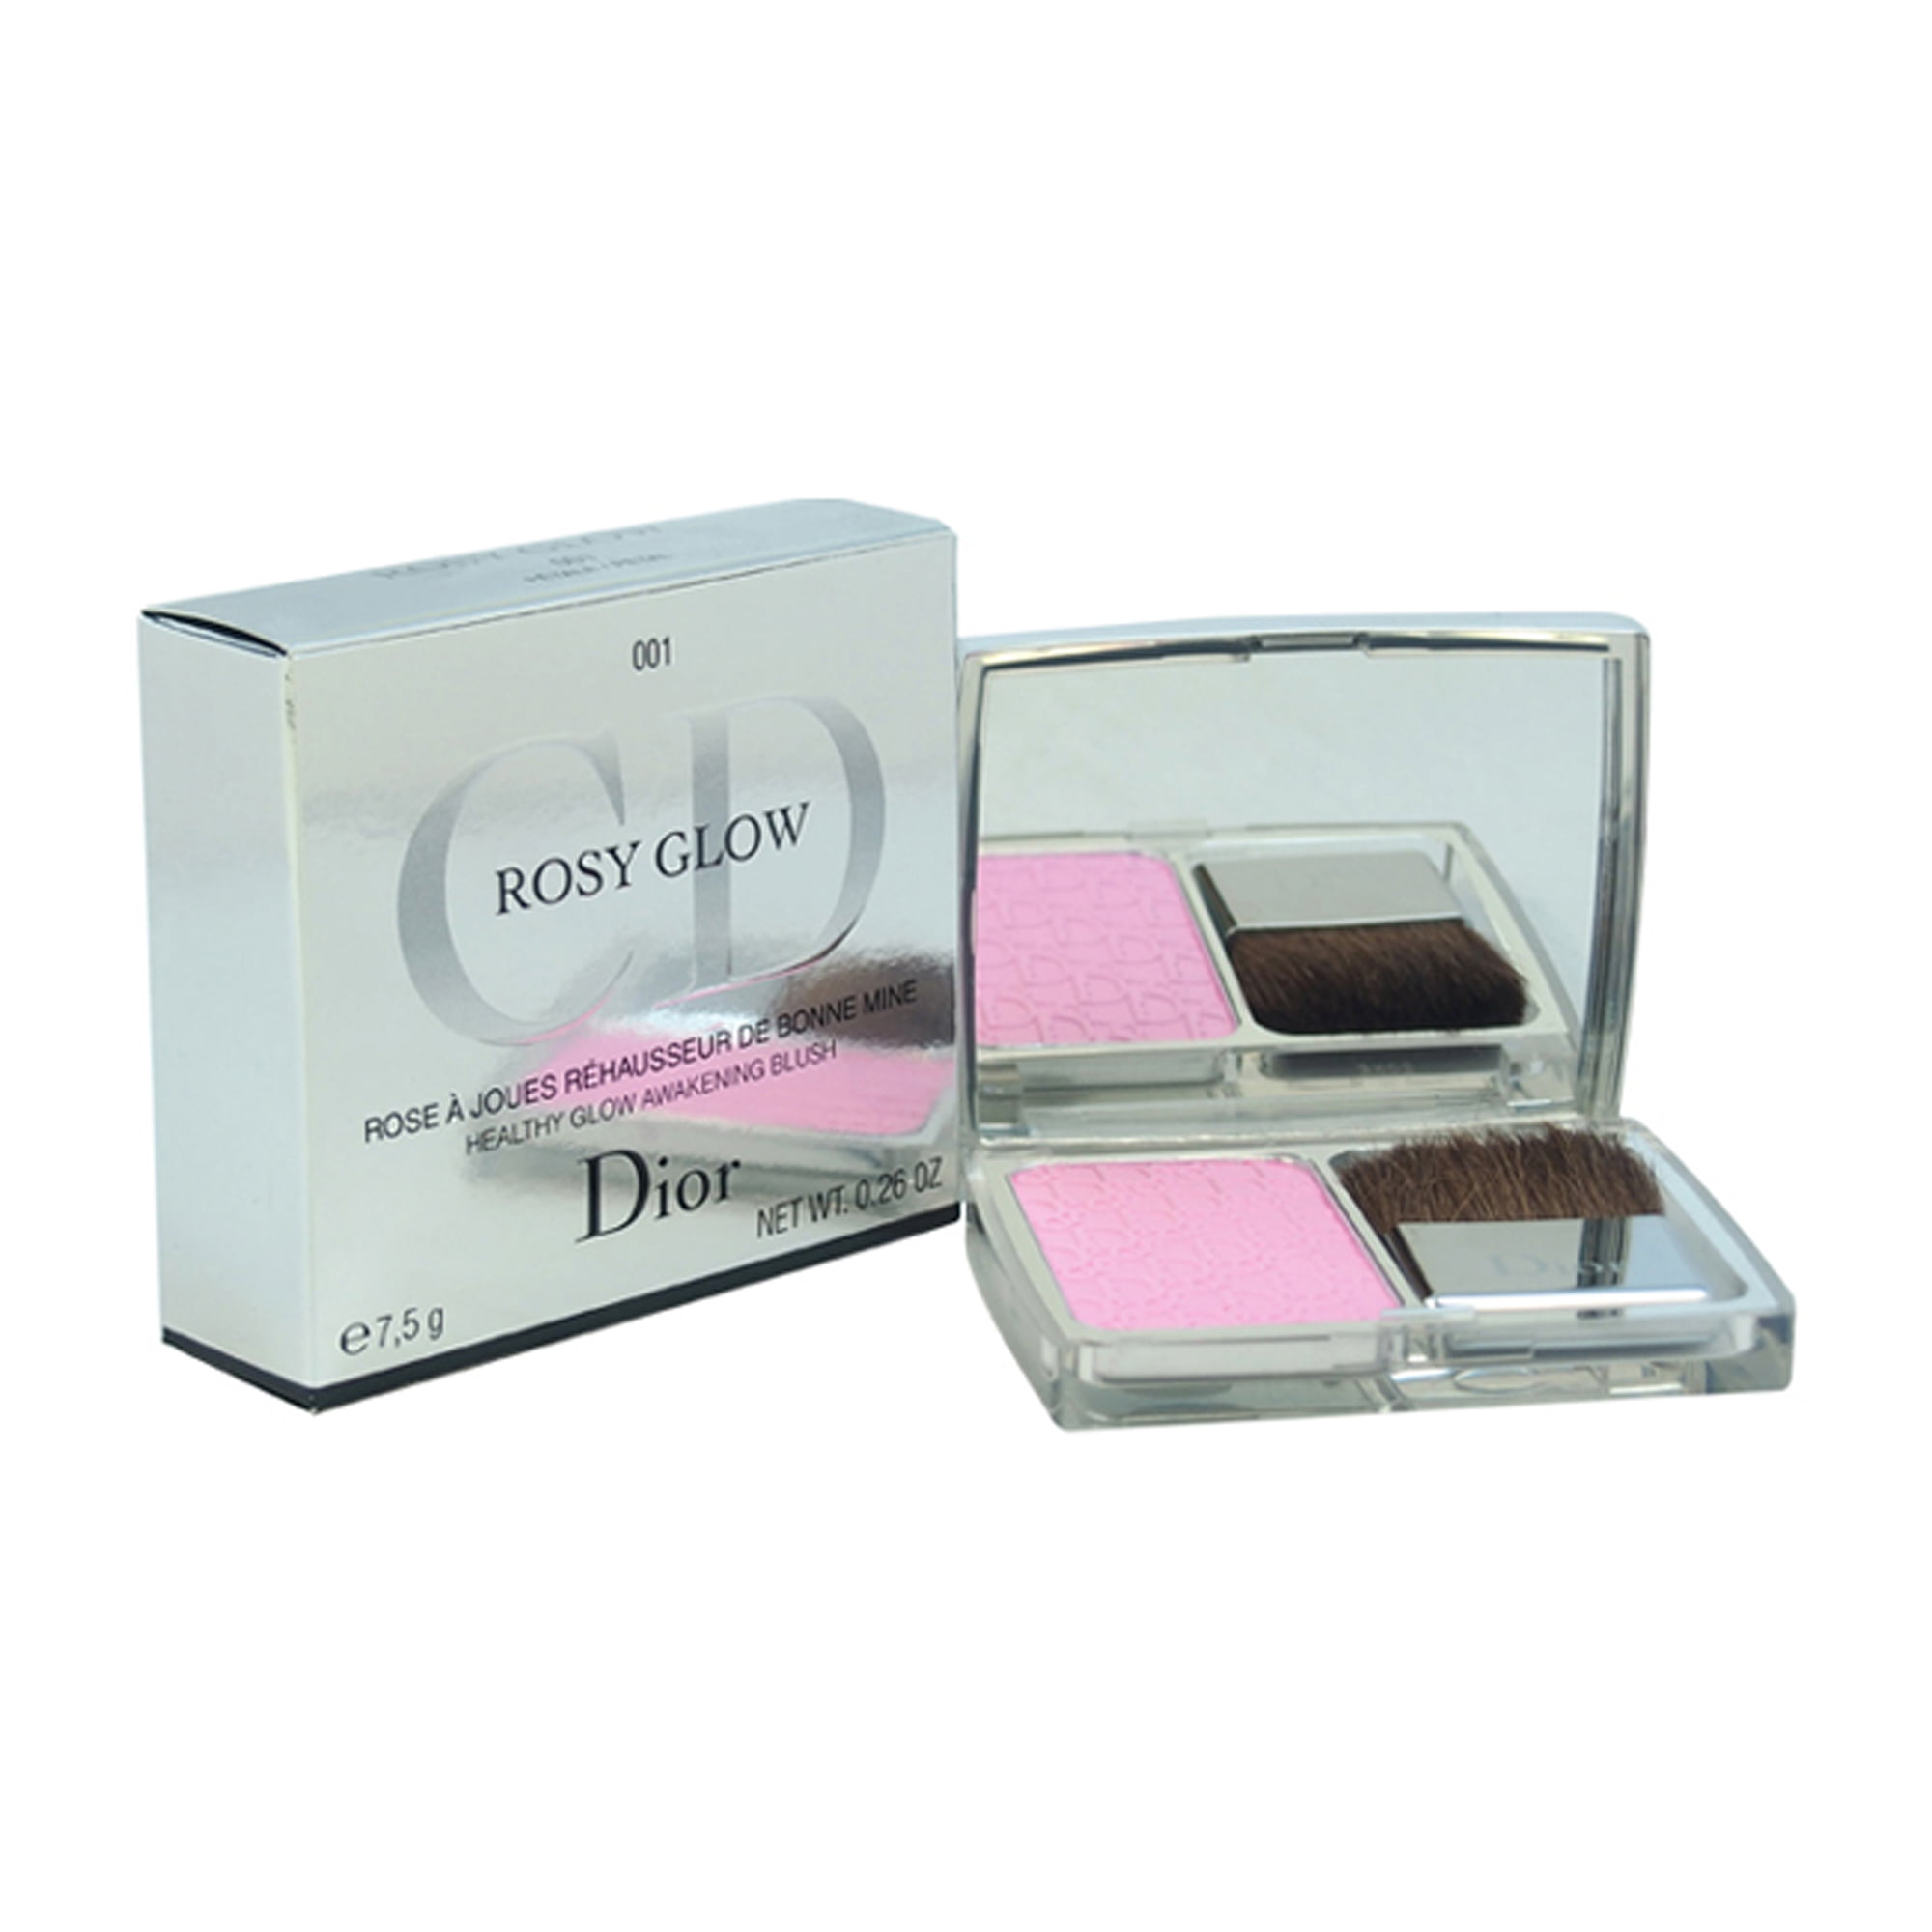 Dior - Rosy Glow Healthy Glow Awakening Blush # 001 Petal by Christian